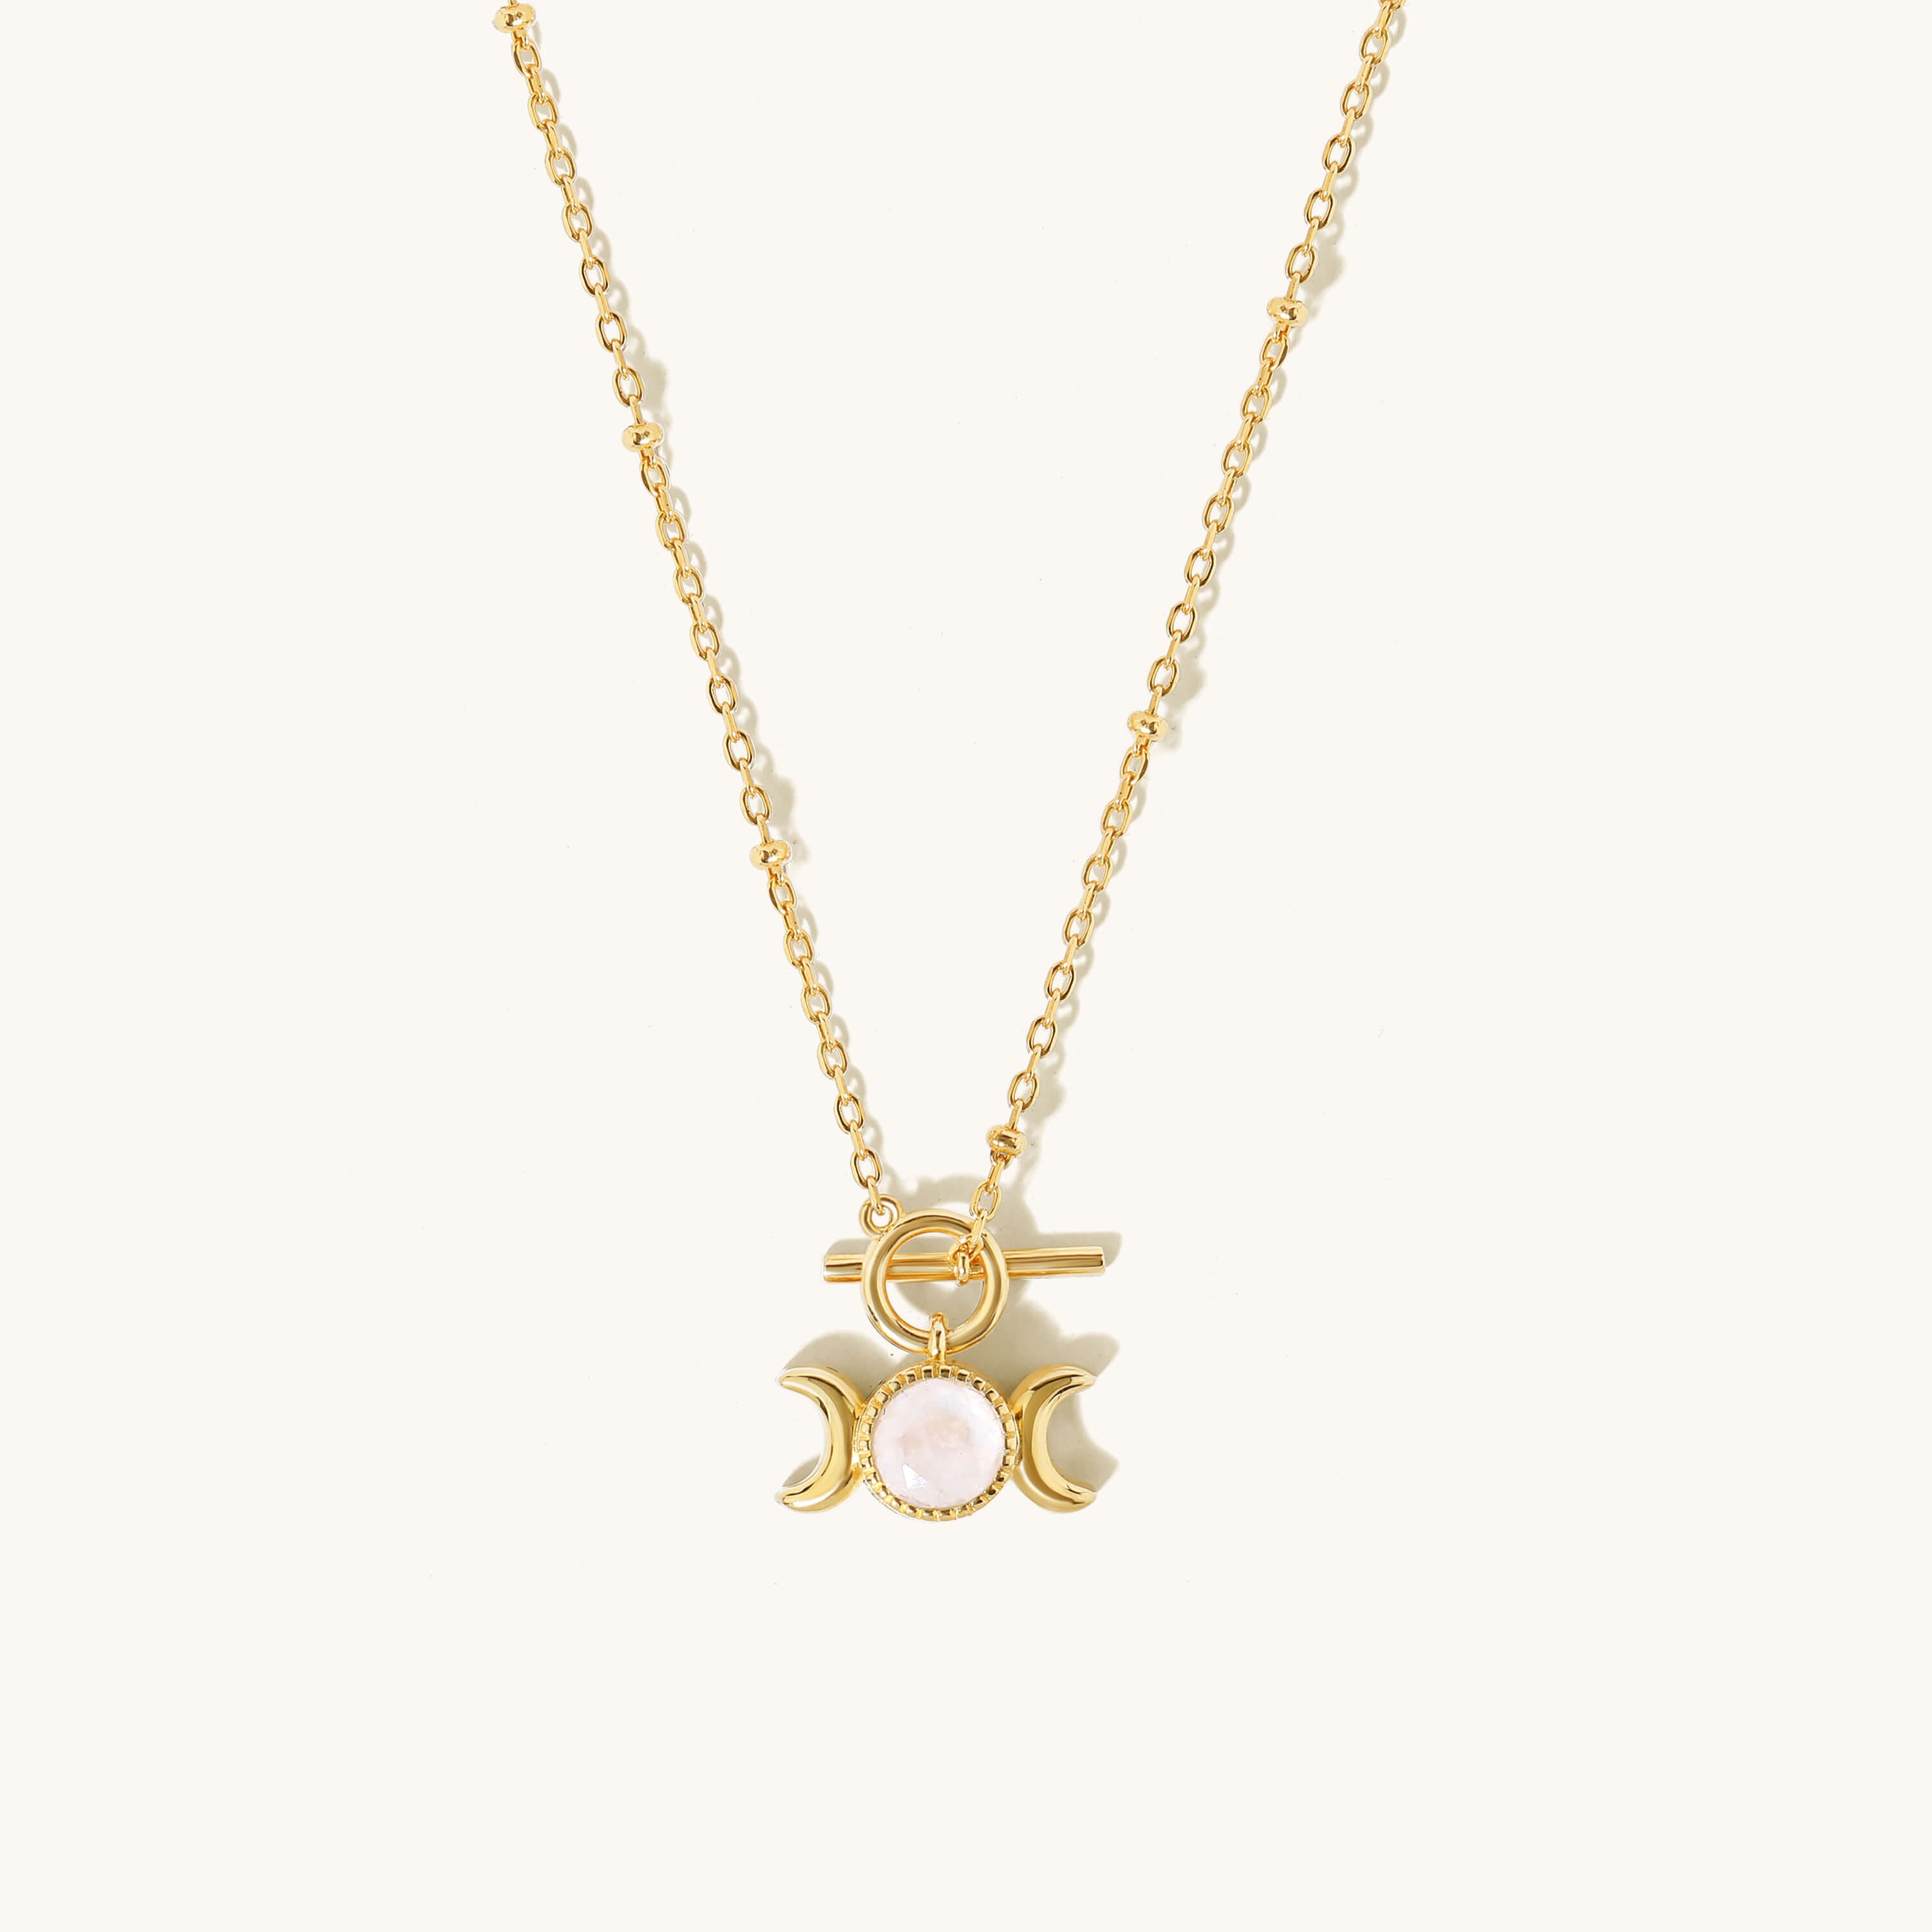 Triple Goddess Moonstone Toggle Necklace